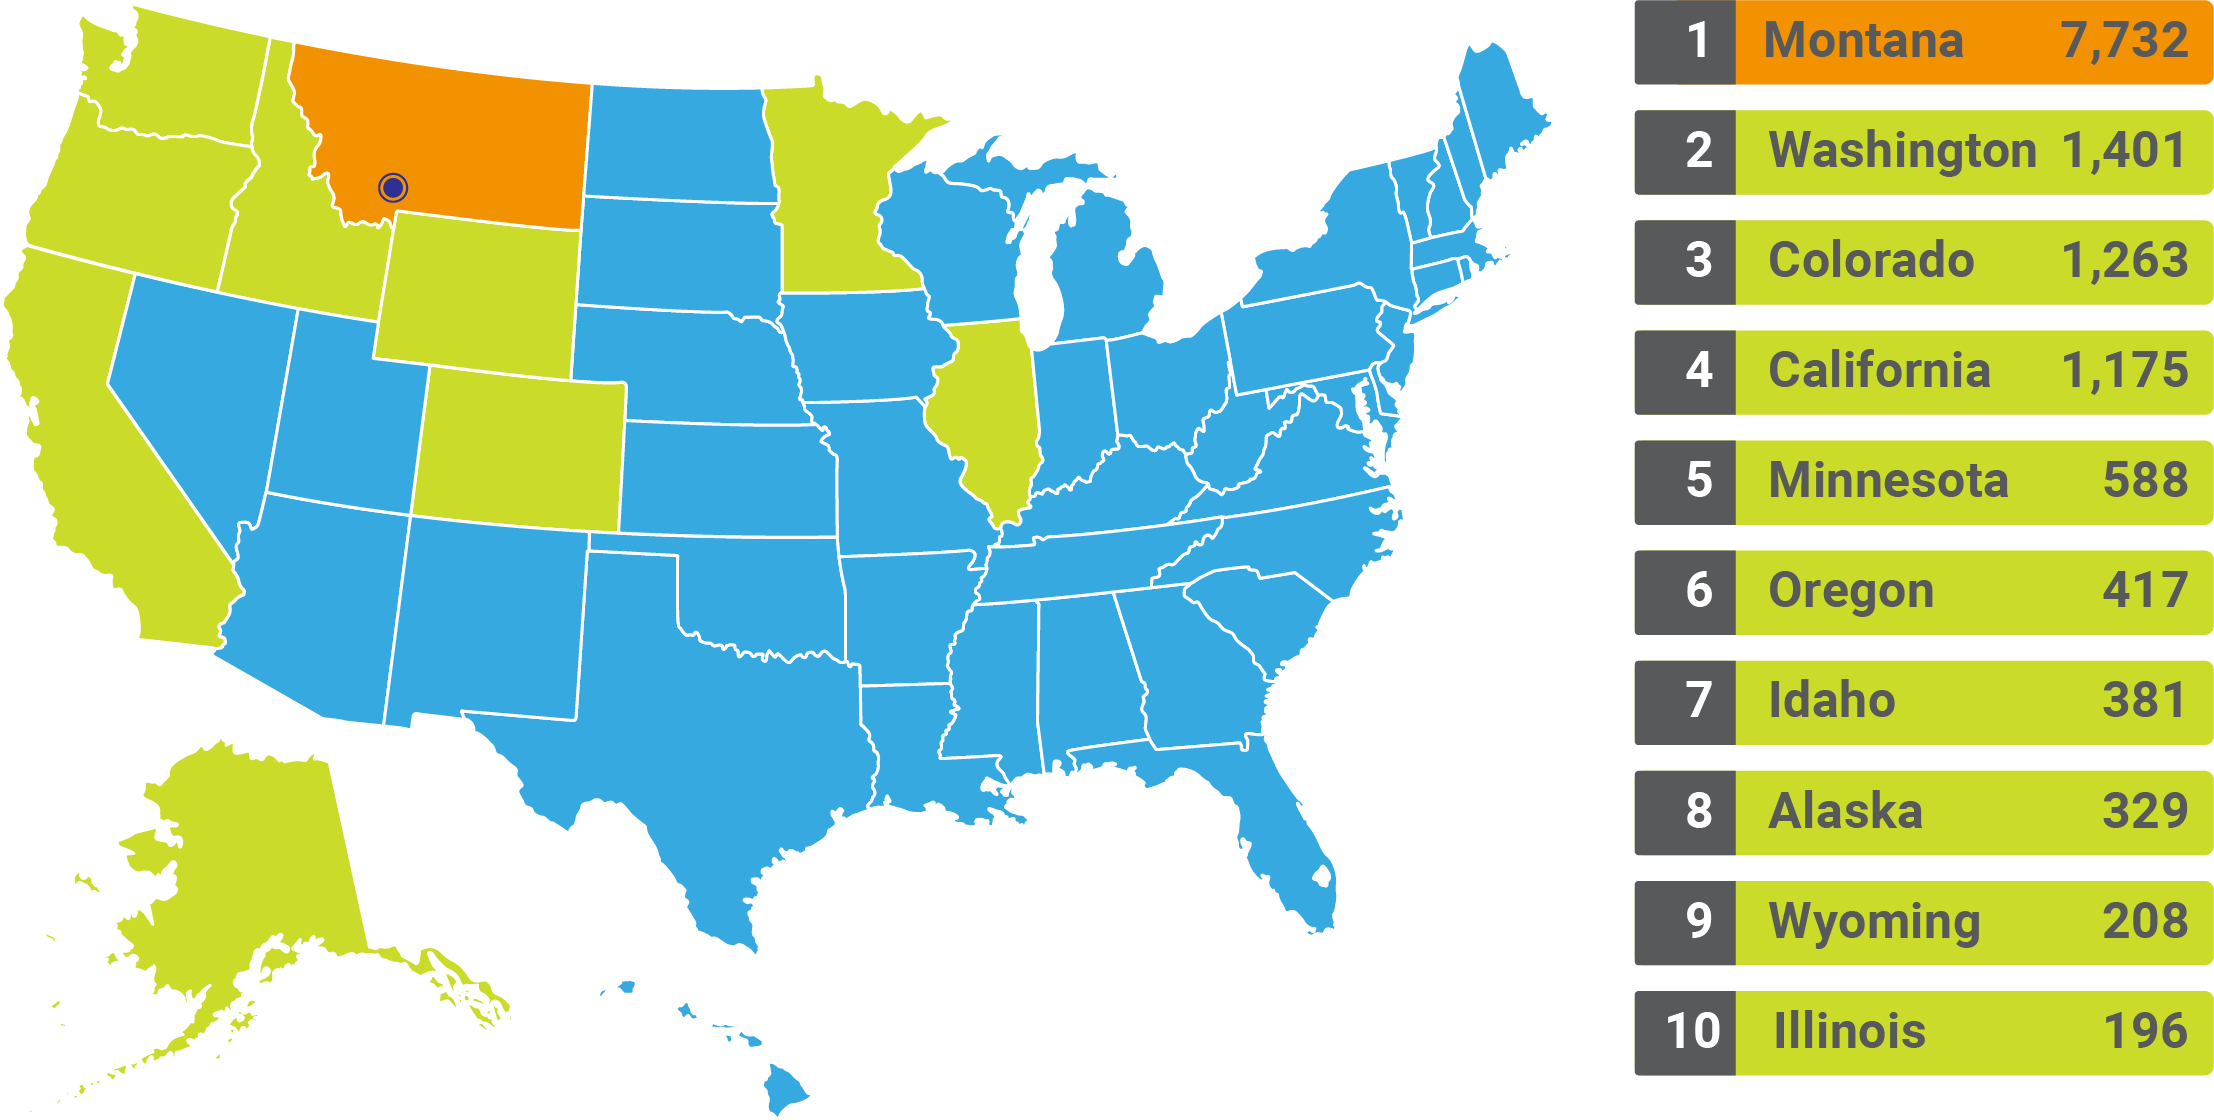 Top 10 home states inclued Montana (7,732), Washington (1,401), Colorado (1,263), California (1,175), Minnesota (588), Oregon (417), Idaho (381), Alaska (329), Wyoming (208), and Illinois (196).